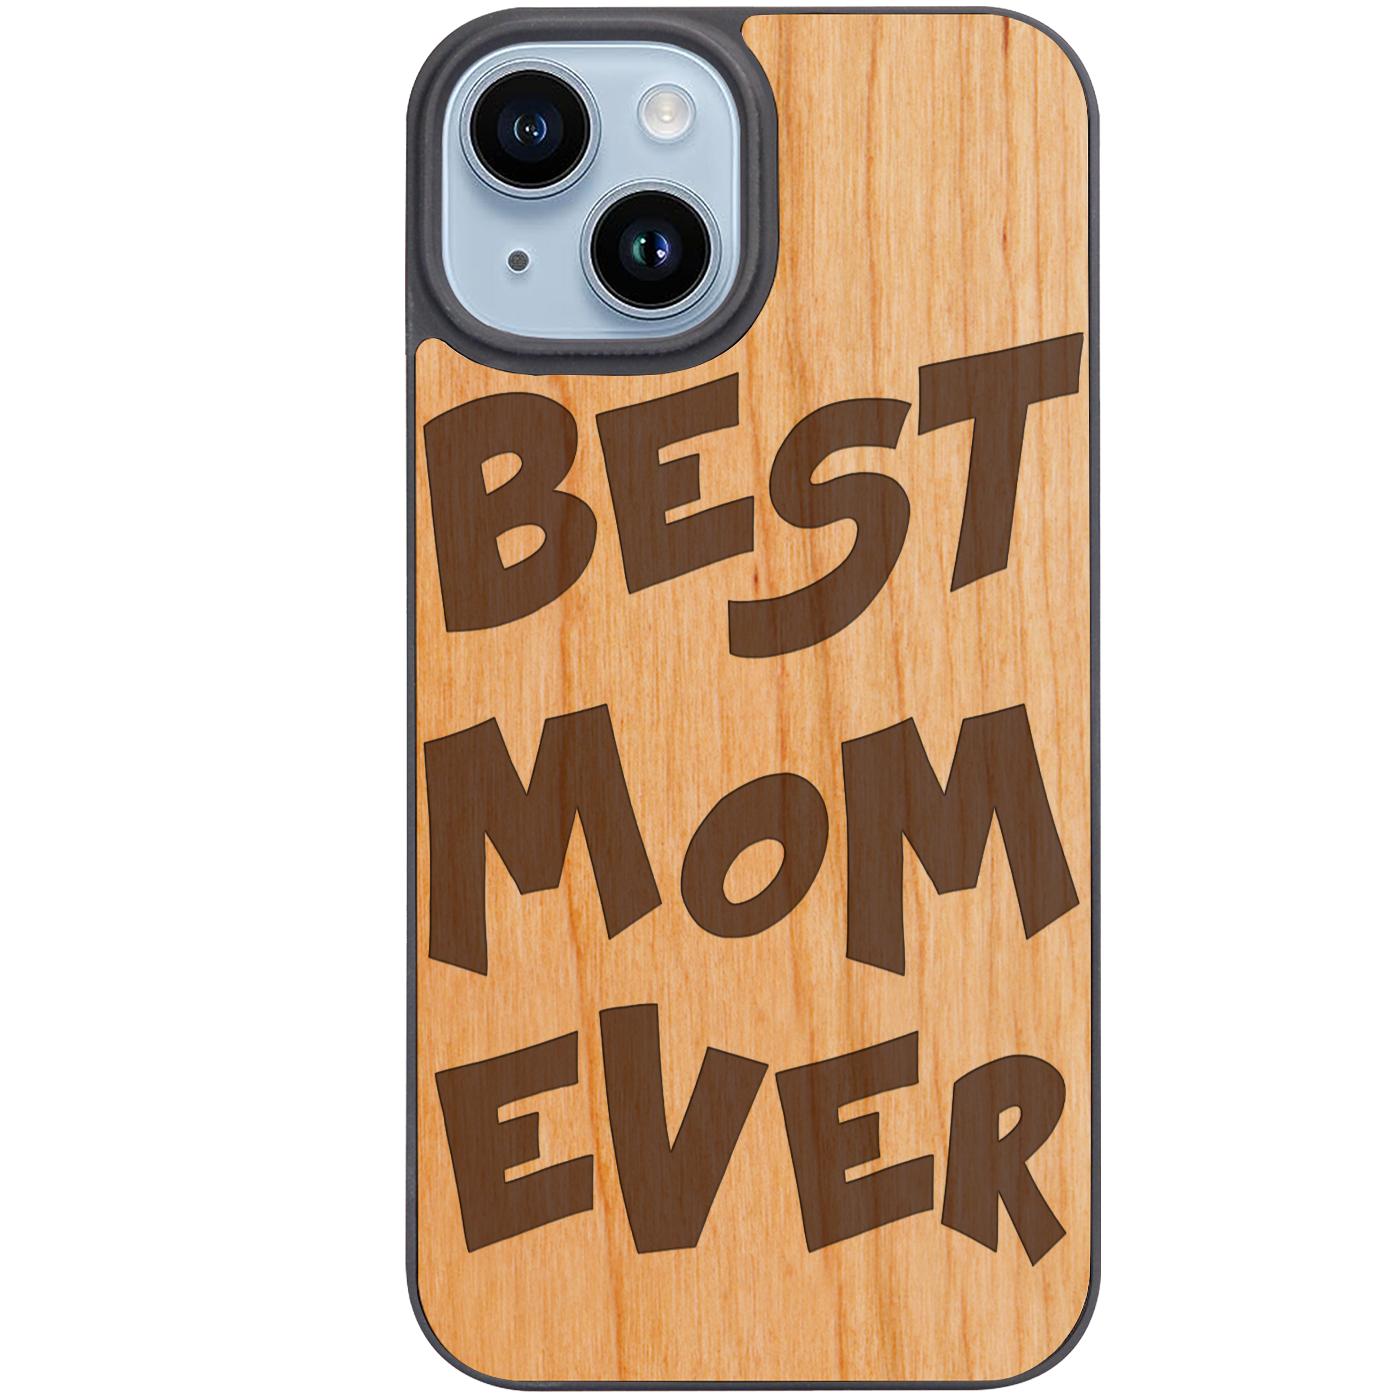 Best Mom Ever - Engraved Phone Case